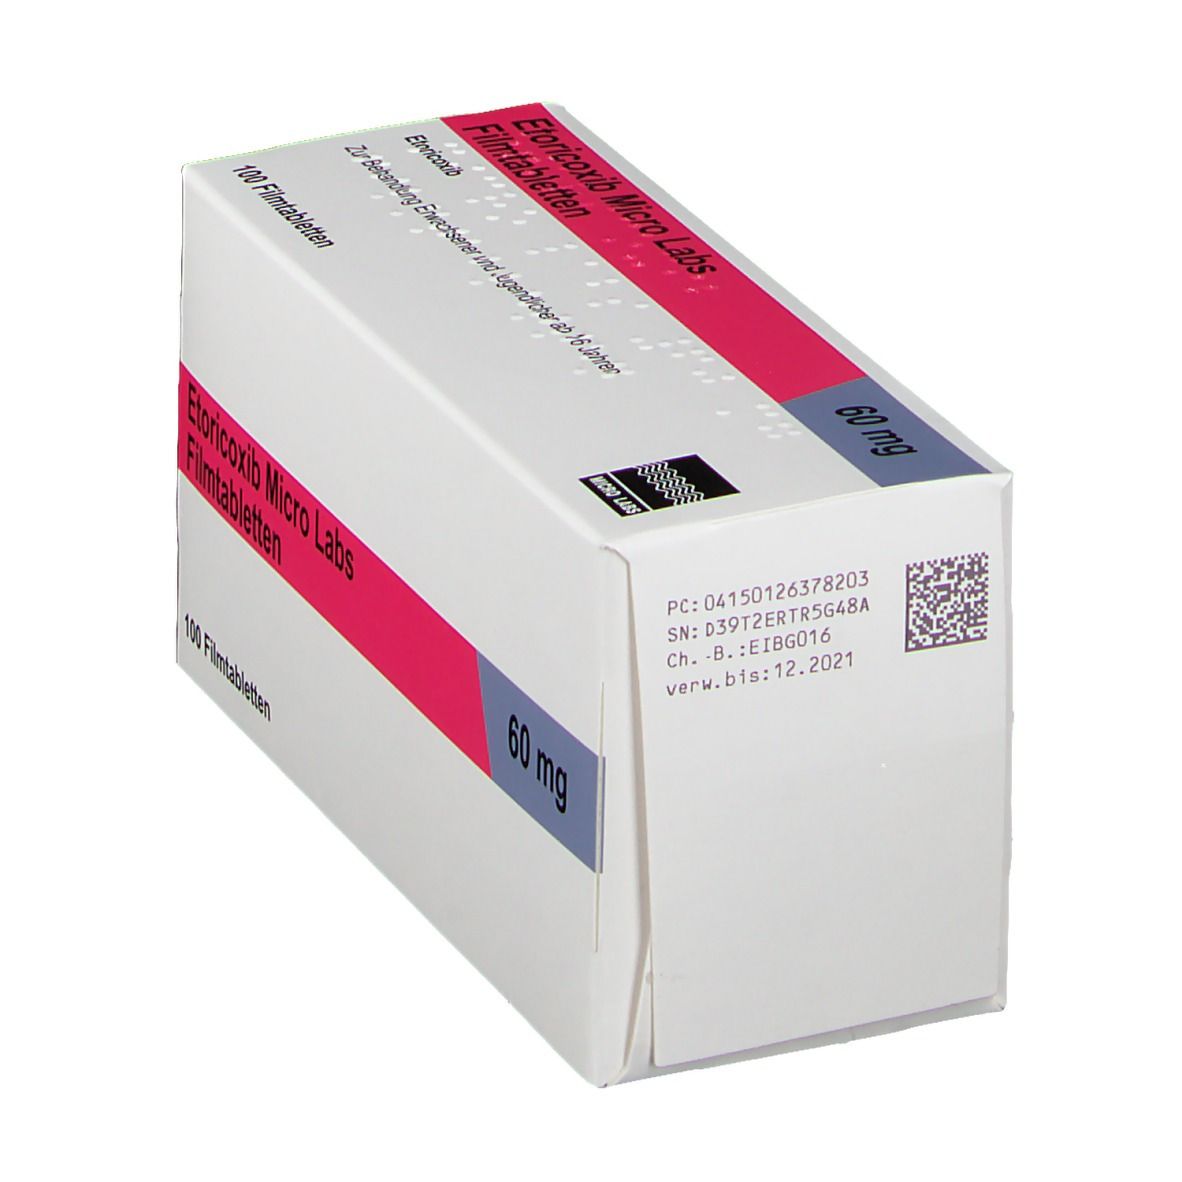 Etoricoxib Micro Labs 60 mg